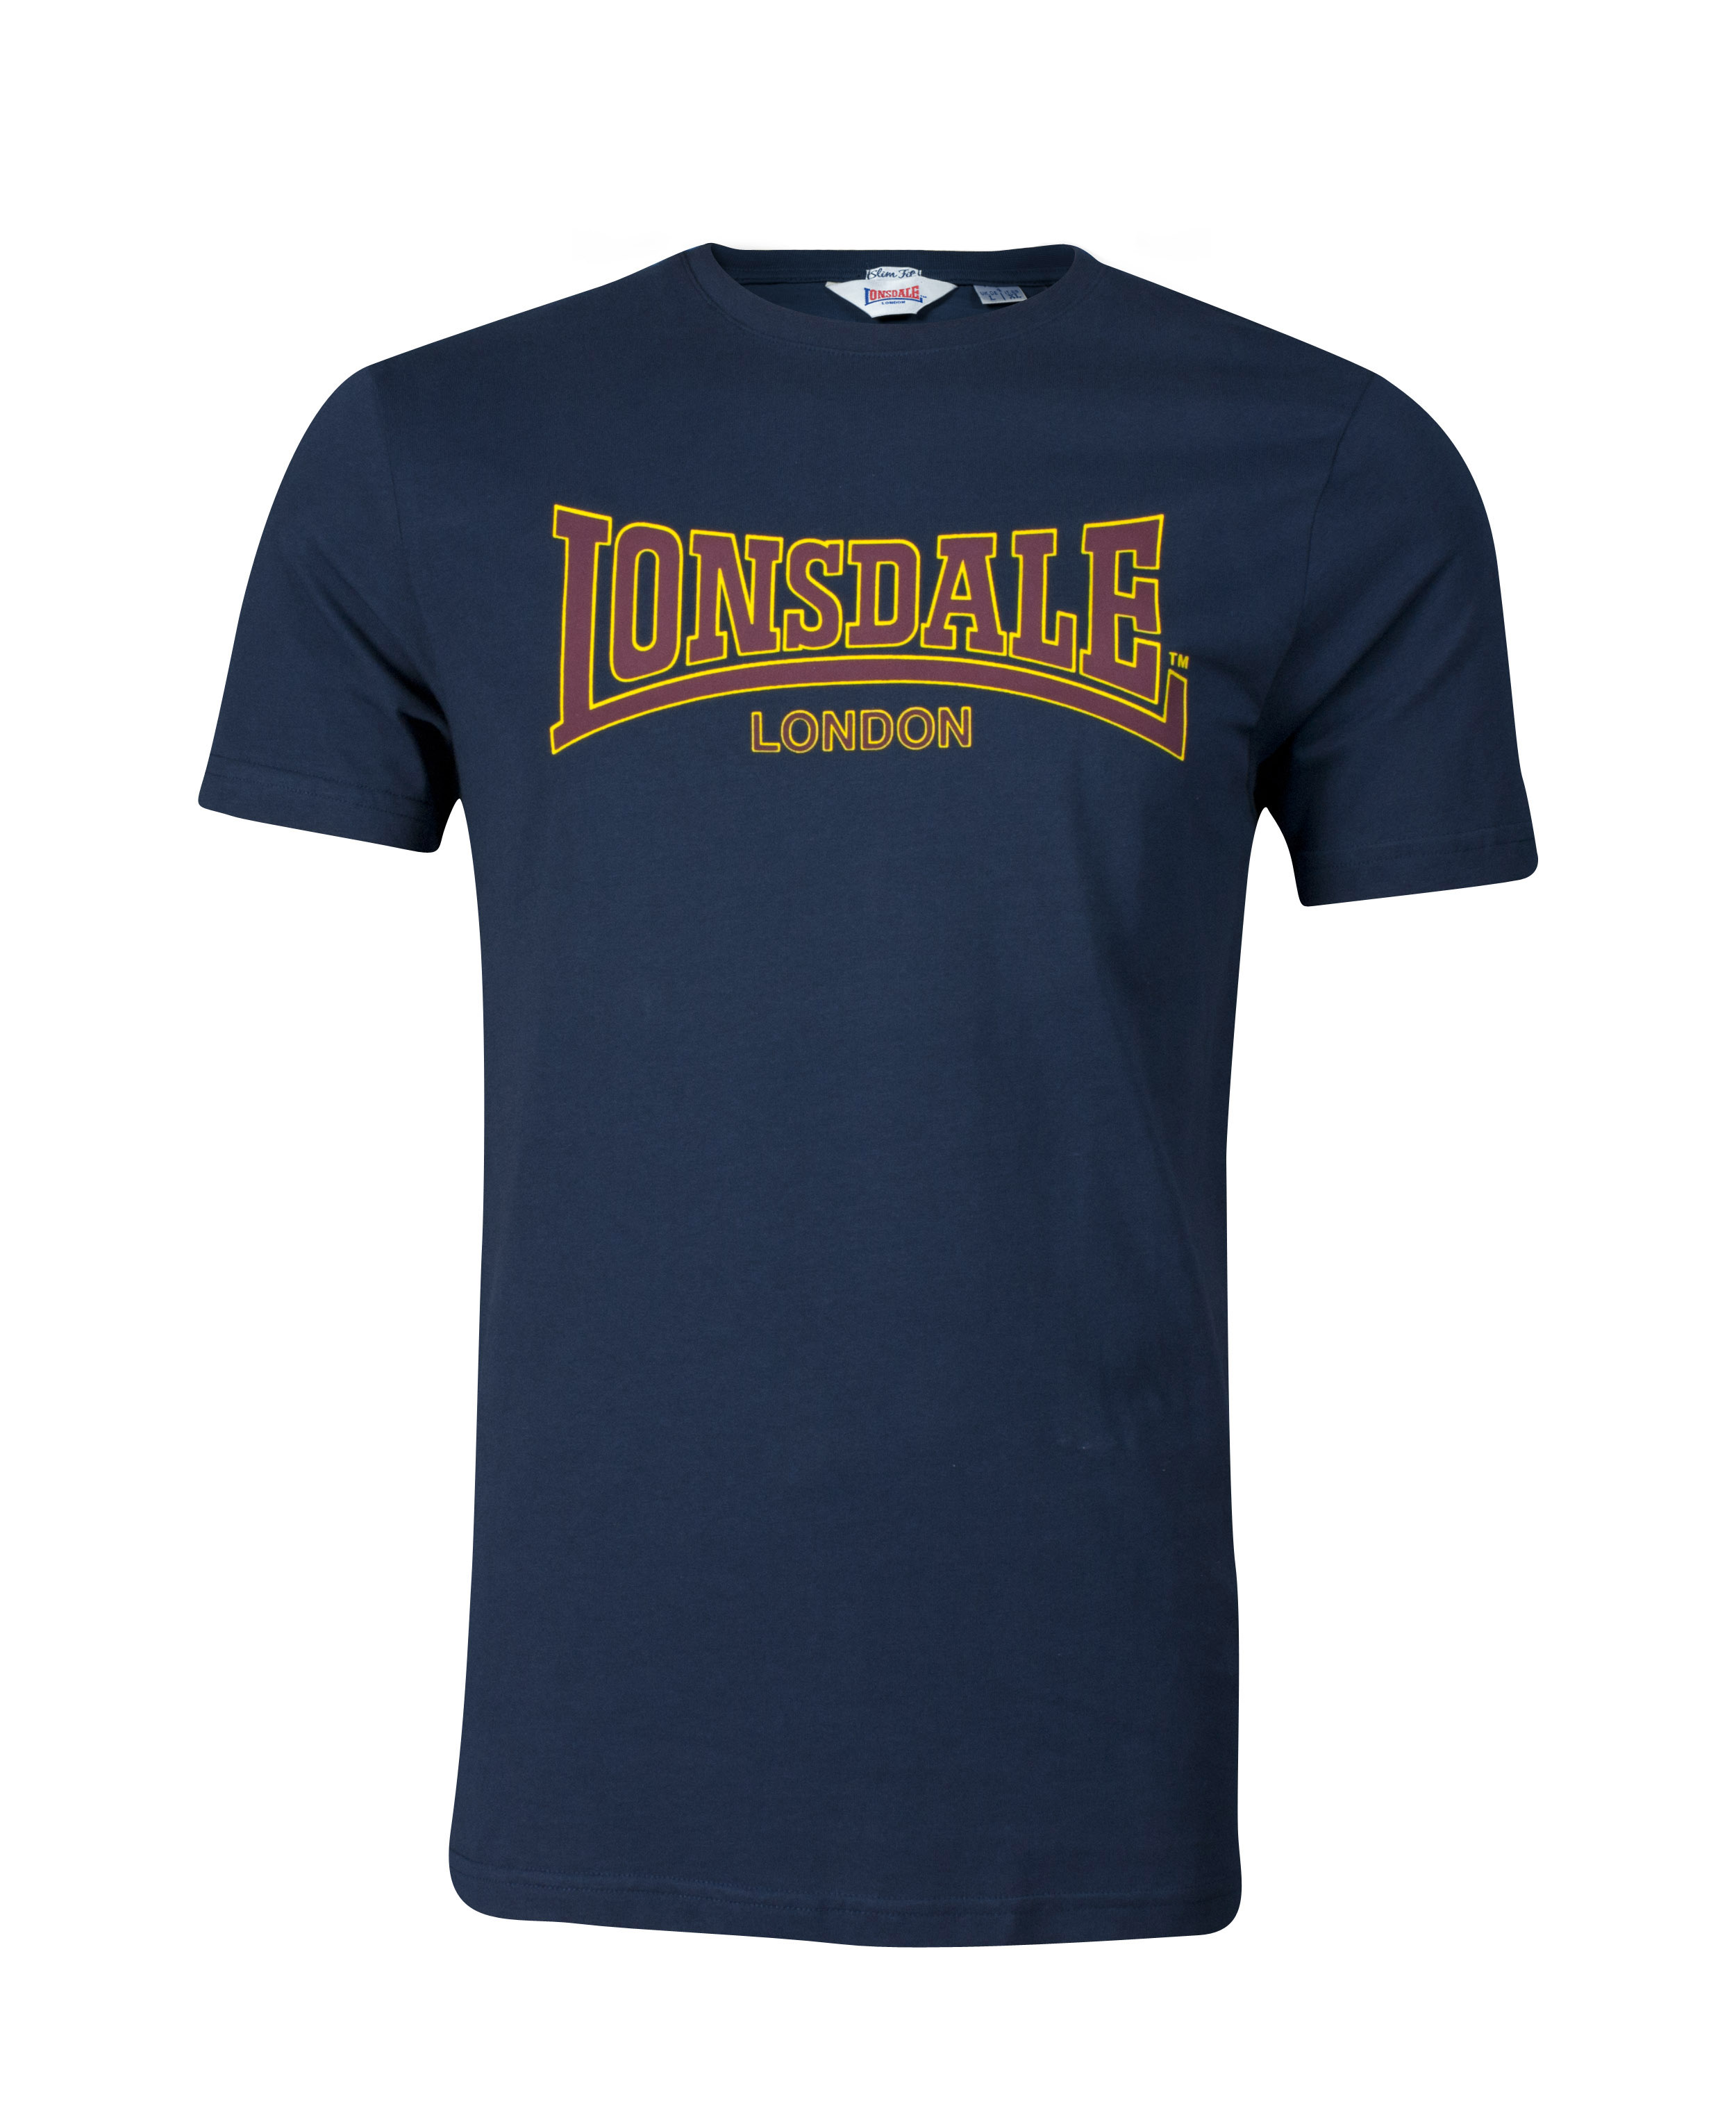 
T-shirt Lonsdale London Classic Granatowy
